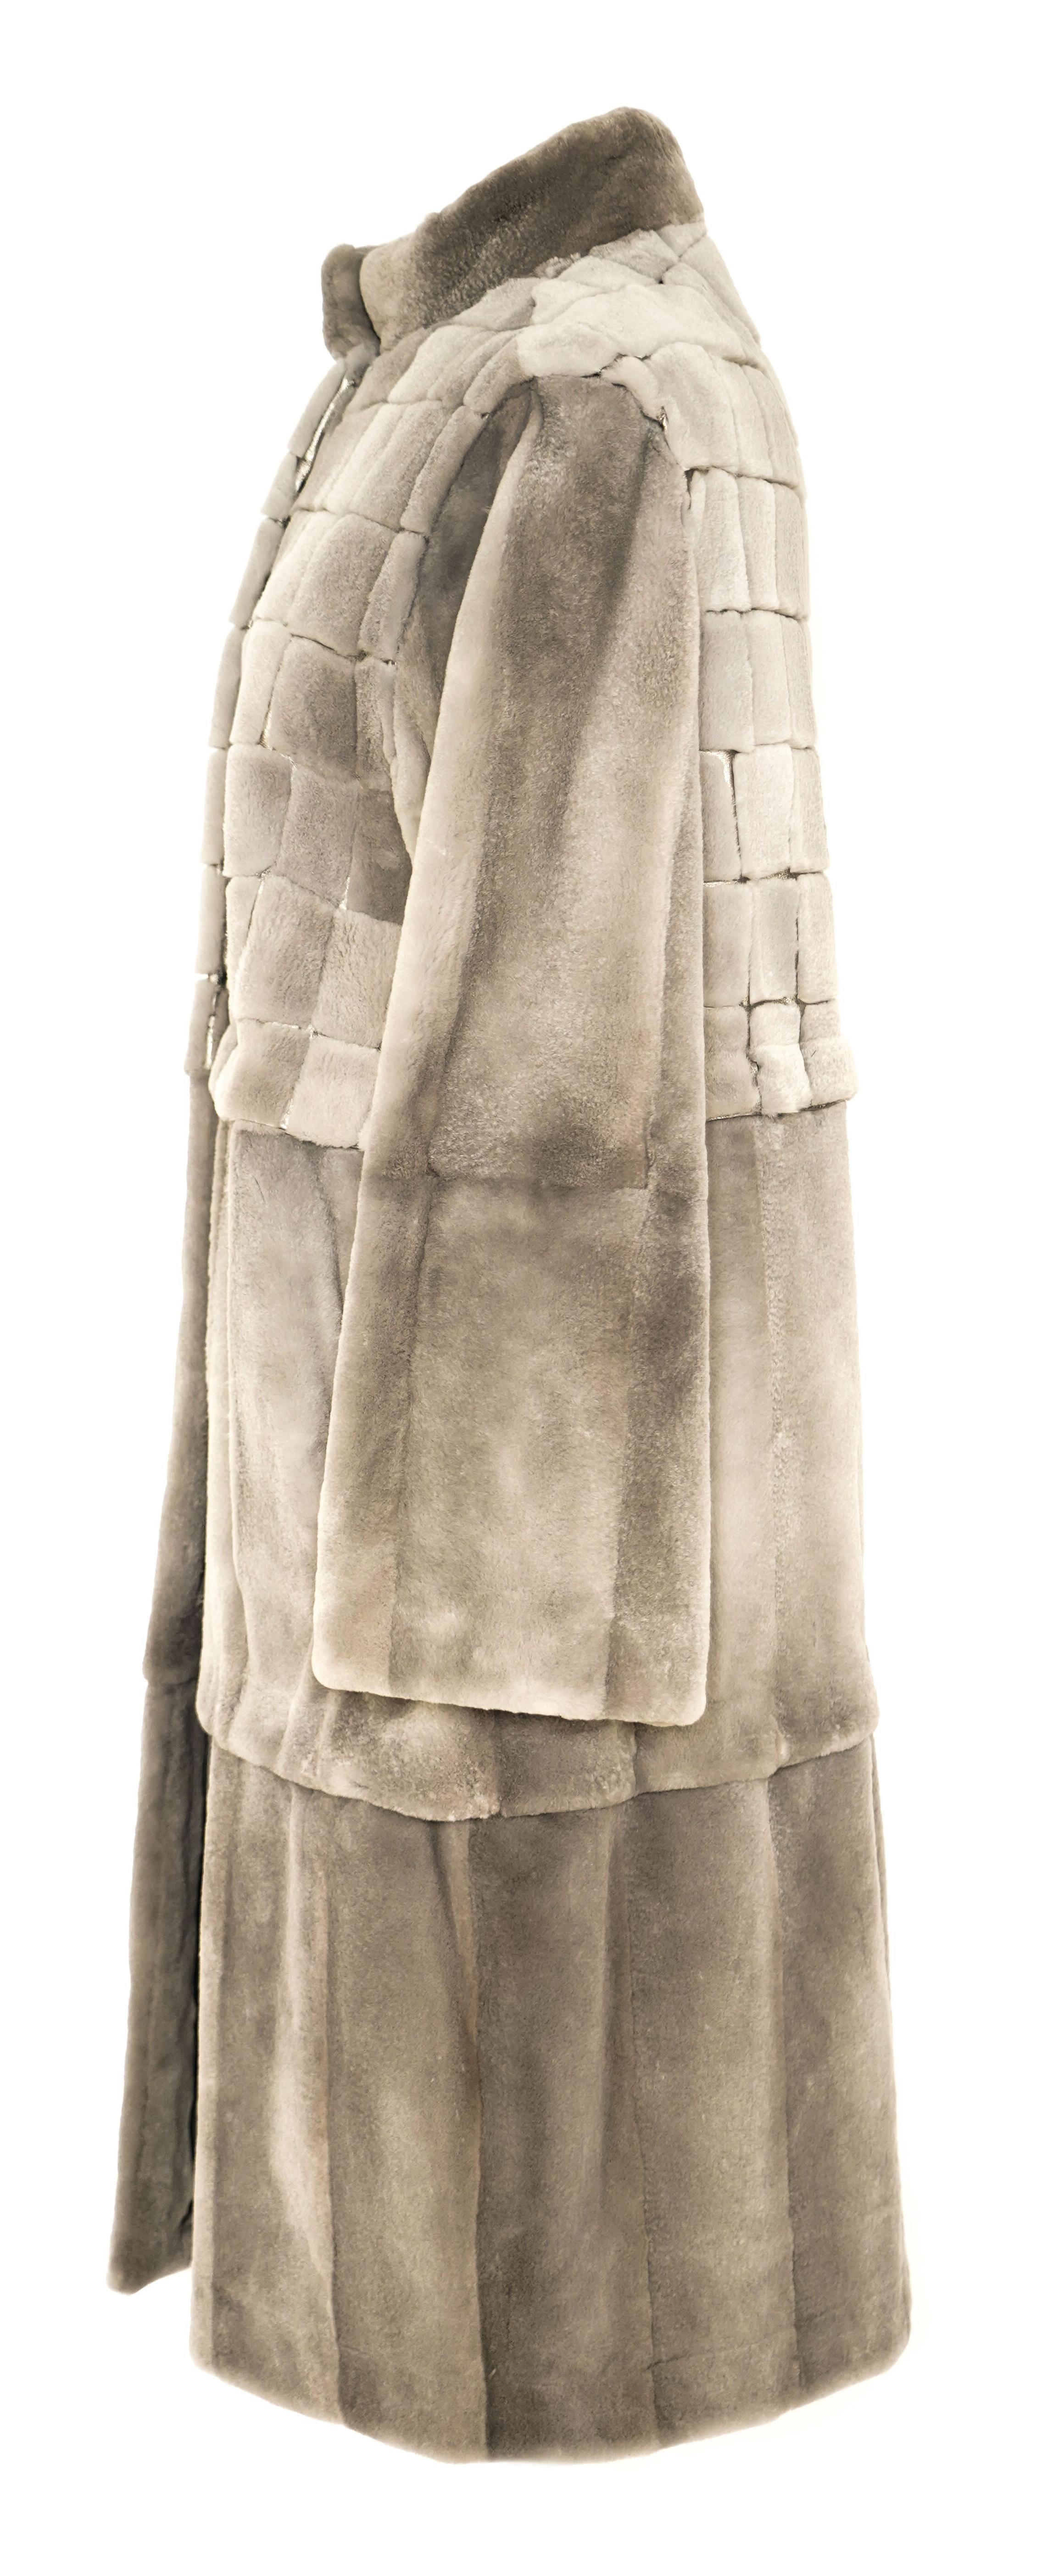 Shaved mink coat. 100% silk detachable lining.
Color: natural grey.